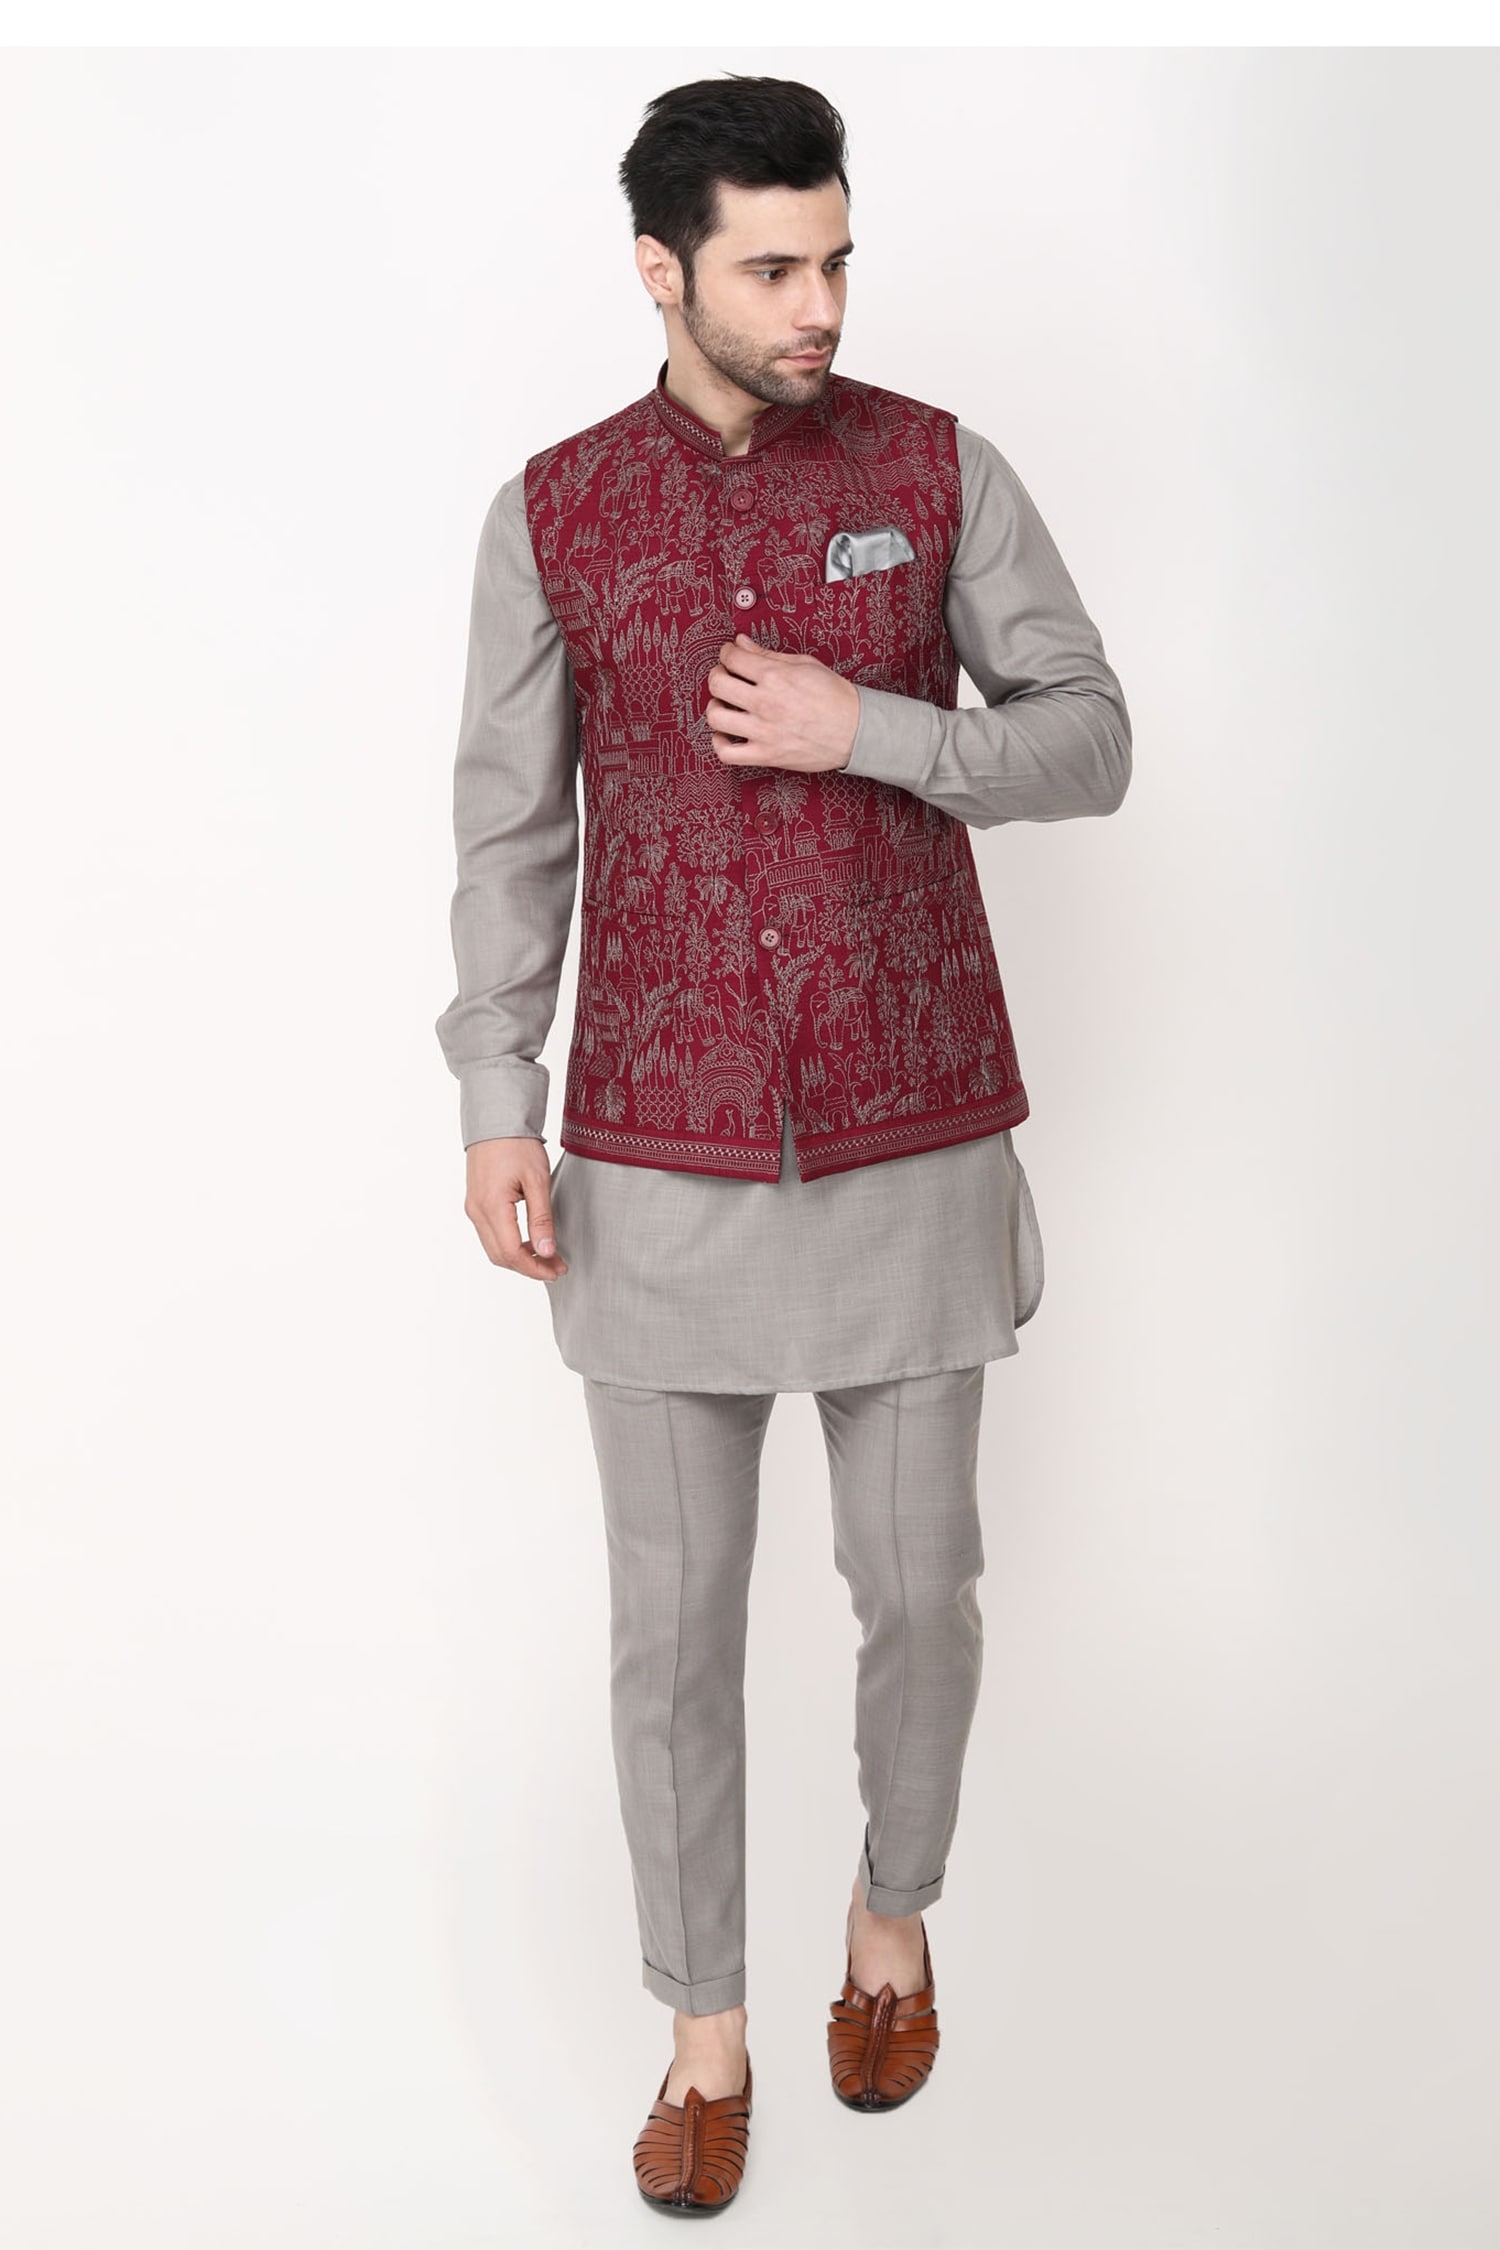 Buy Embroidered Work Jacket Style Salwar Suit Online